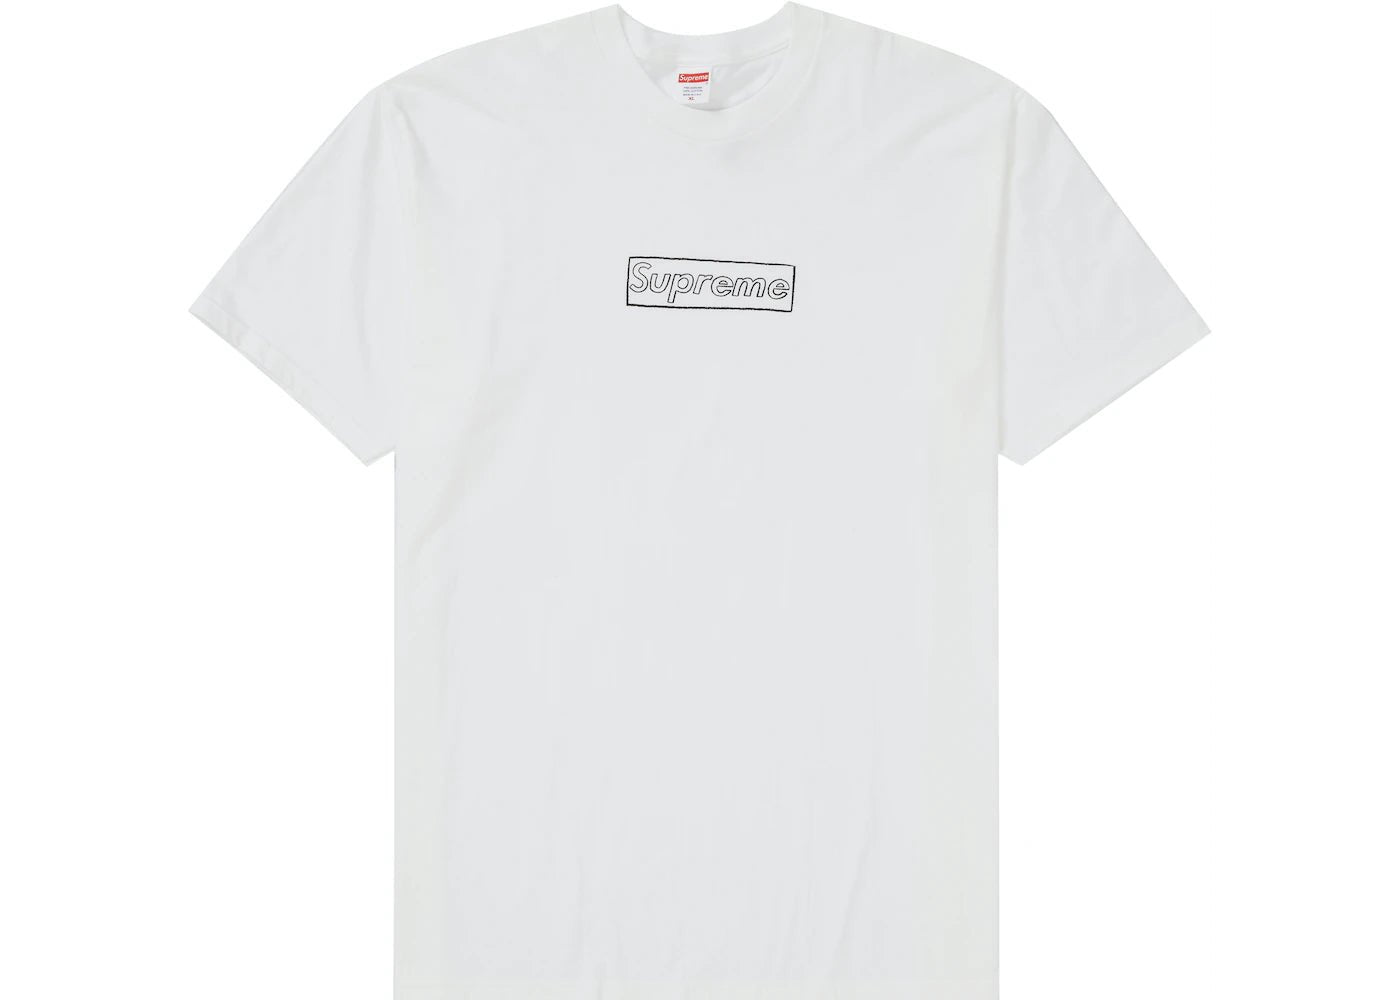 Supreme KAWS Chalk Logo Tee White シュプリーム カウズ チョーク ロゴ Tシャツ ホワイト - VICTORIA SNKRS